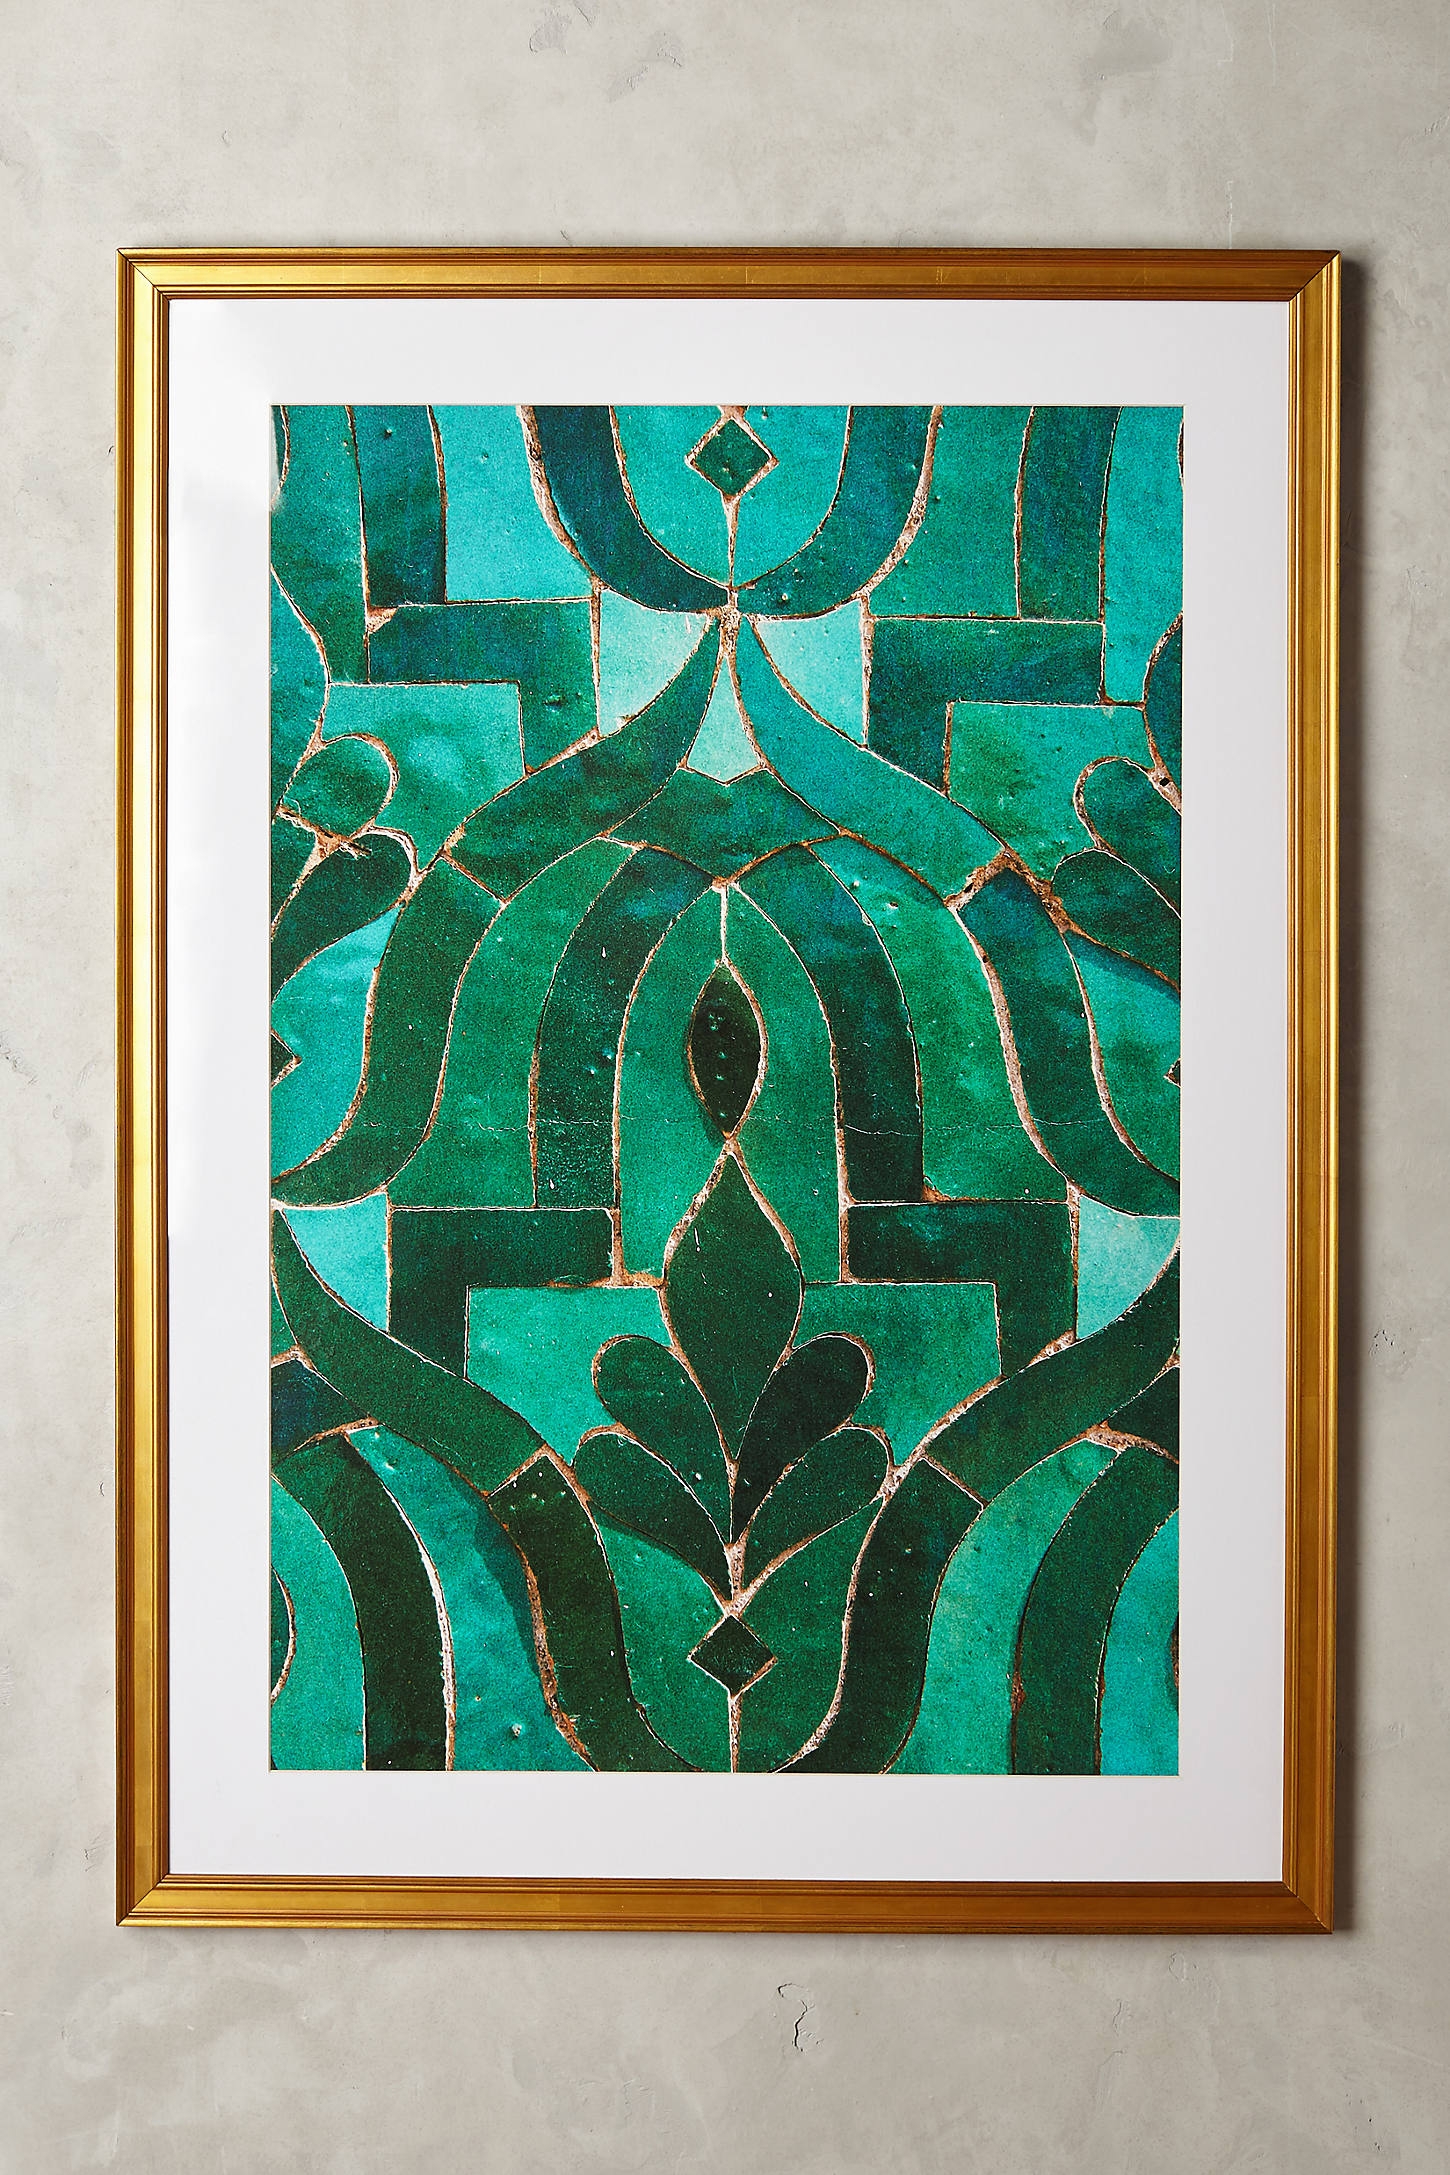 Moroccan Tile Wall Art - Image 0